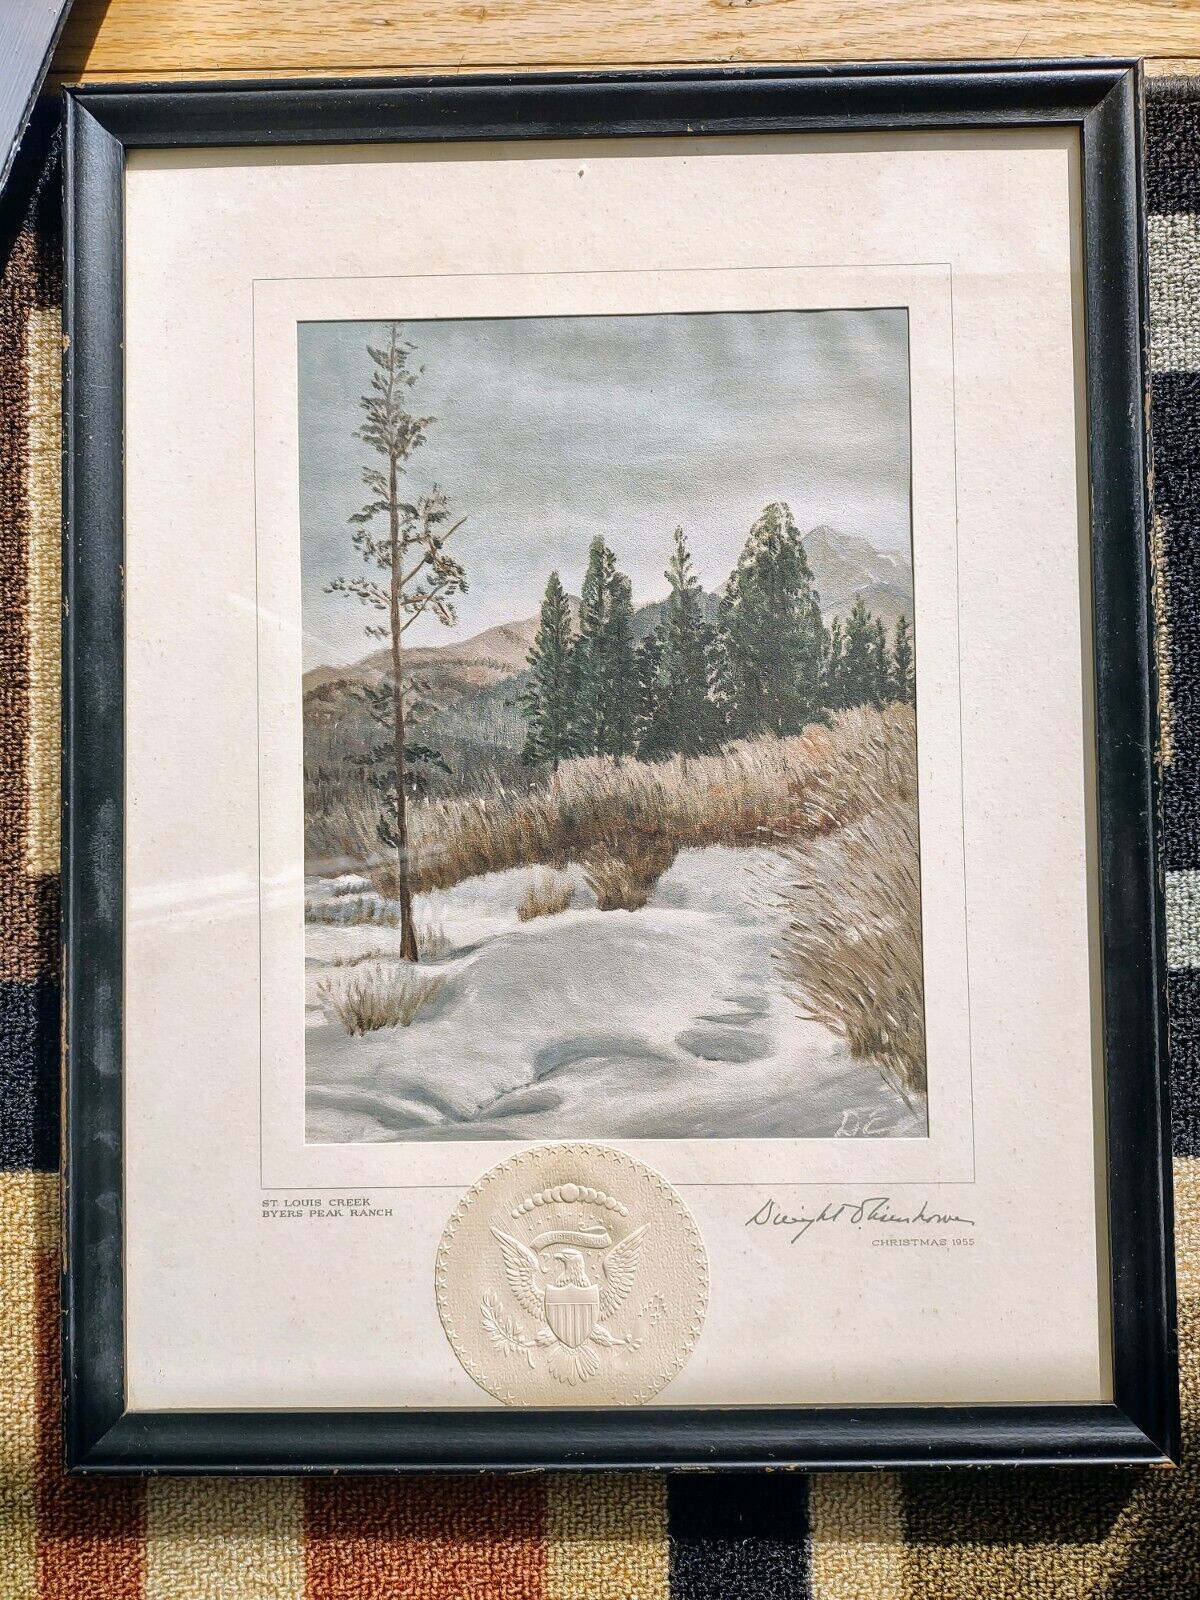 1955 Framed Eisenhower Christmas Print of St. Louis Creek Byers Peak Ranch